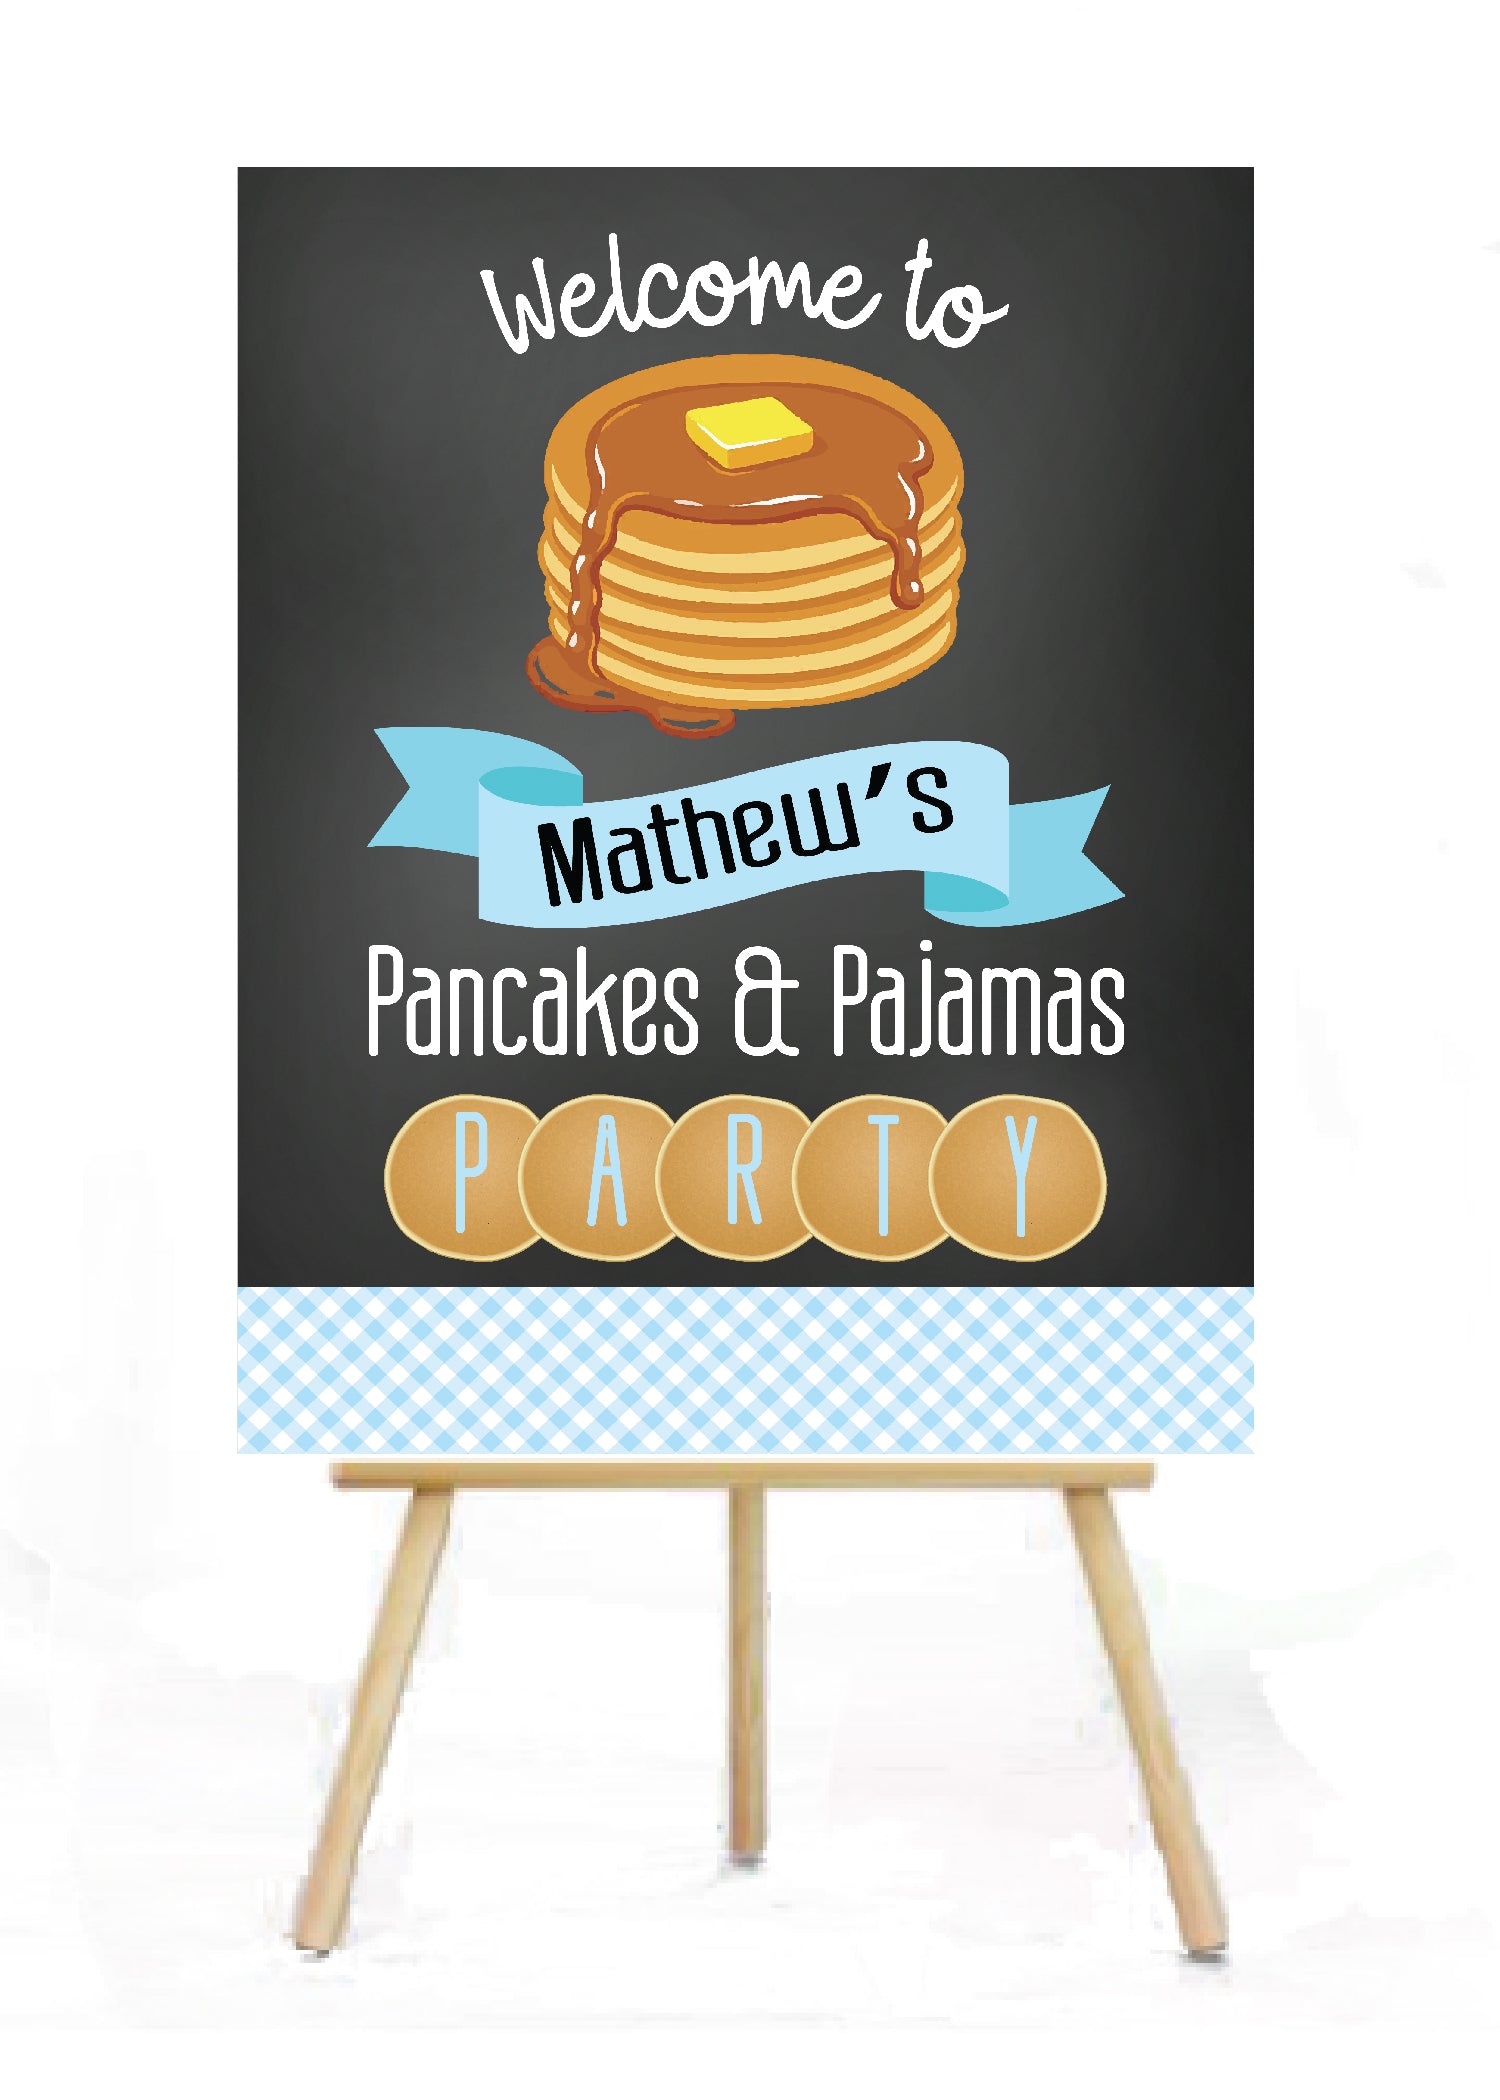 Pancakes and Pajamas boy welcome signage